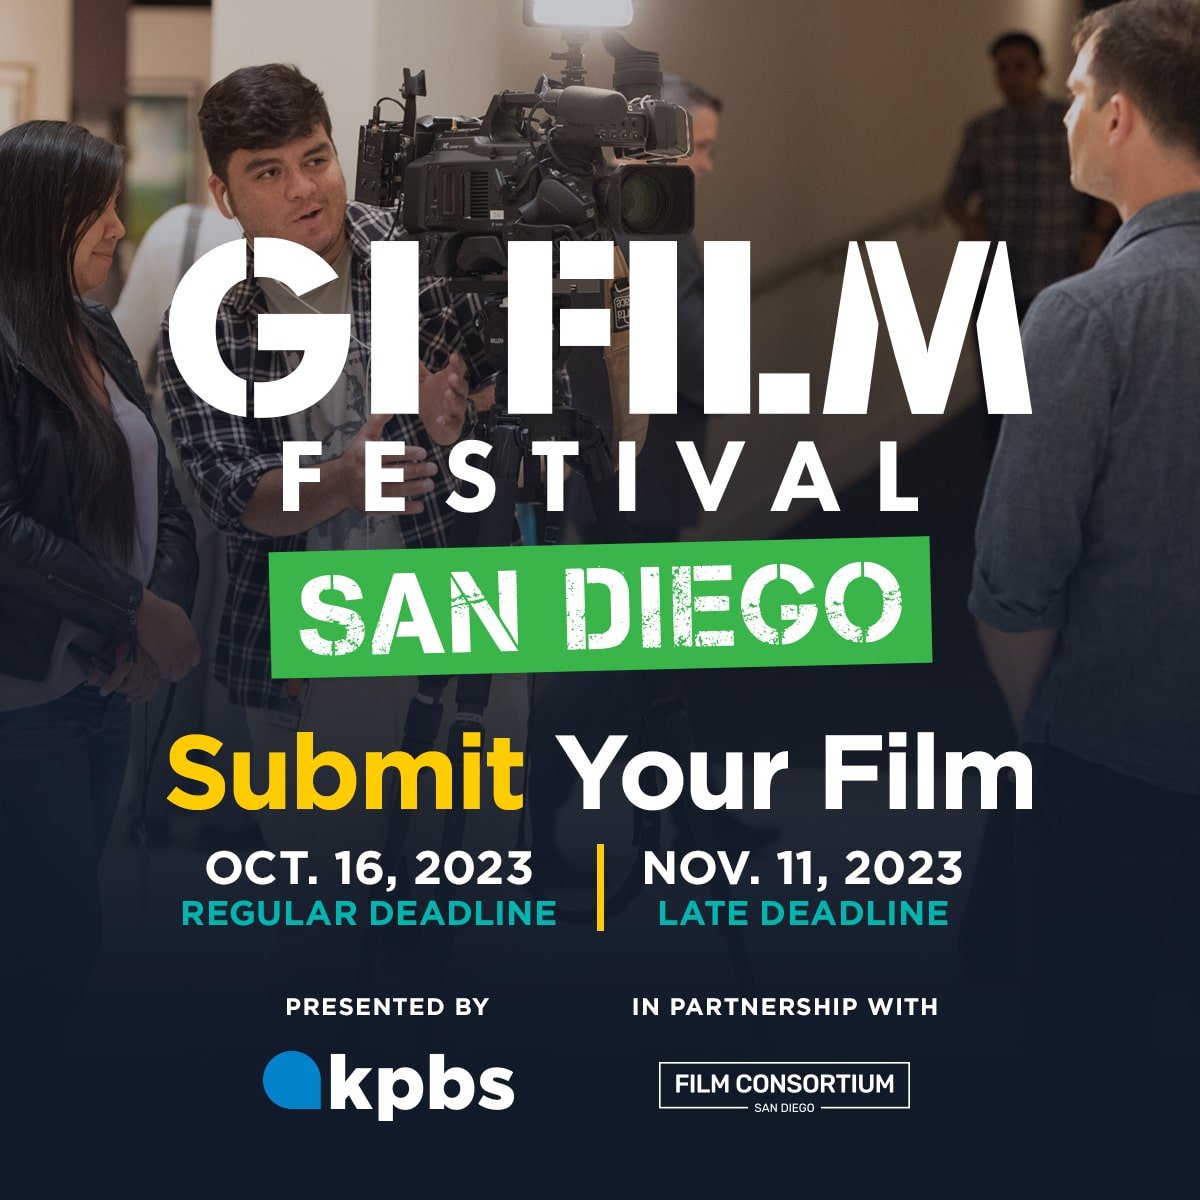 GI FILM FESTIVAL SAN DIEGO 2024. Learn more at https://filmfreeway.com/GIFilmFestivalSanDiego